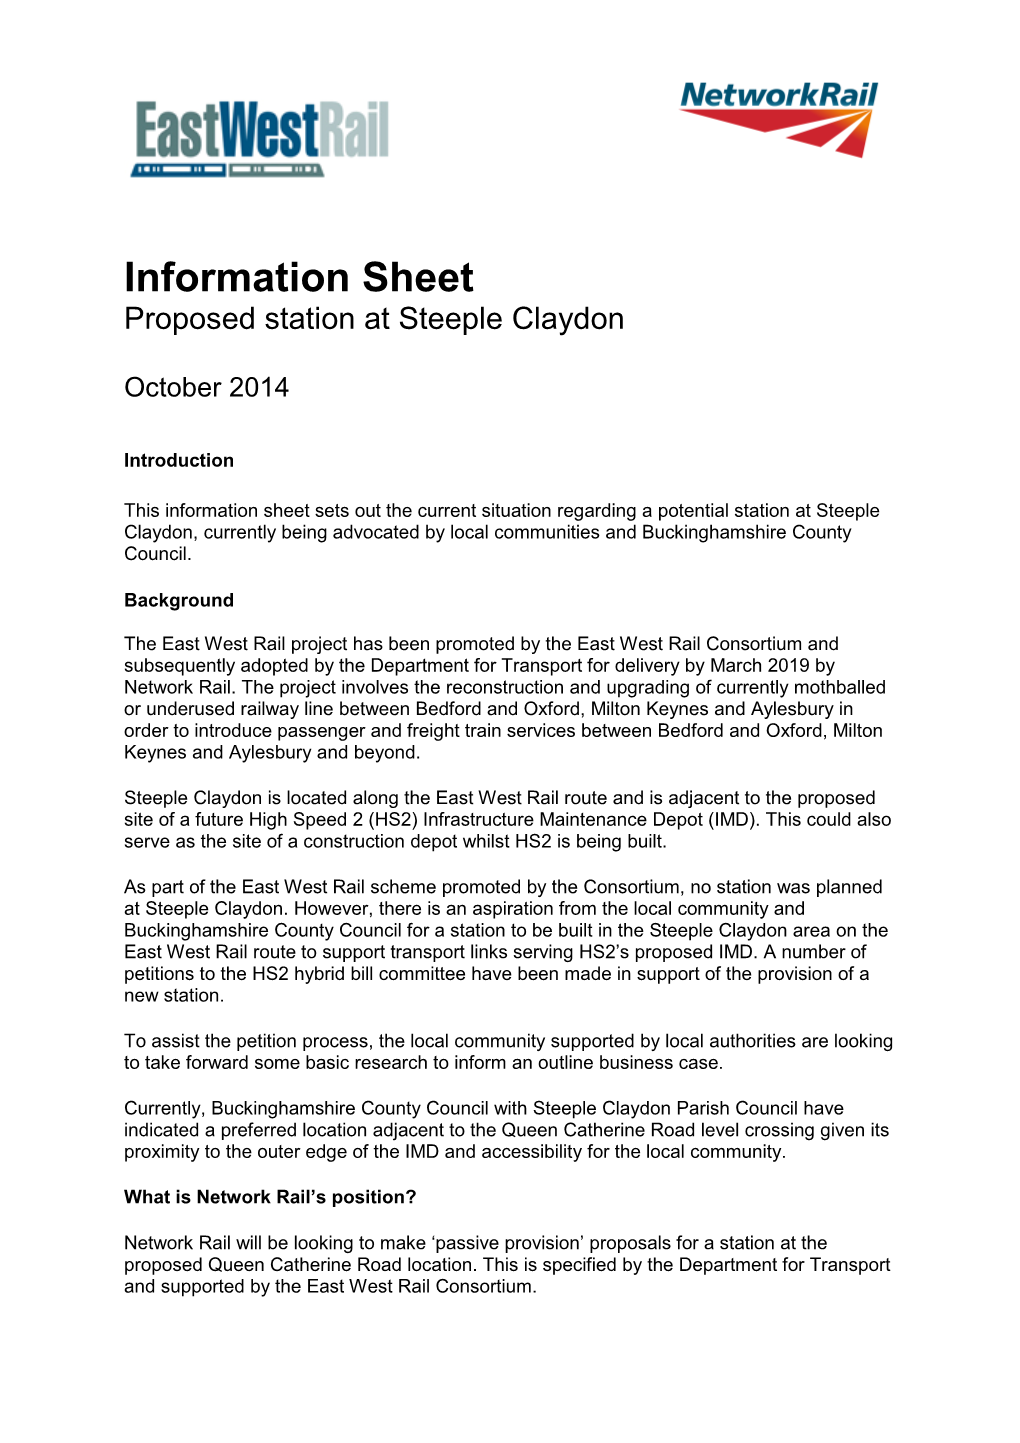 Information Sheet Steeple Claydon Station